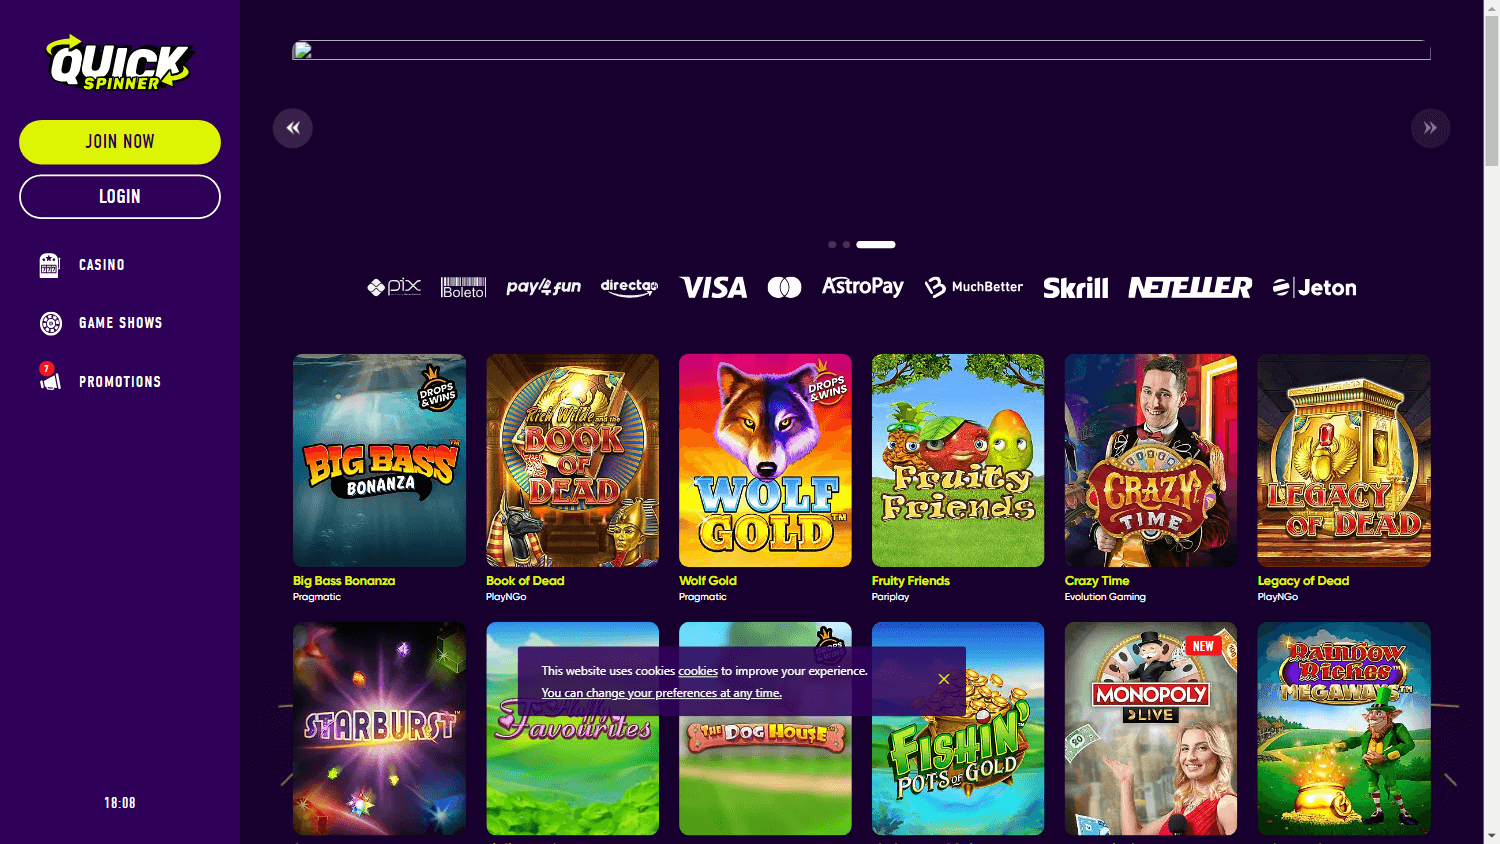 quickspinner_casino_homepage_desktop